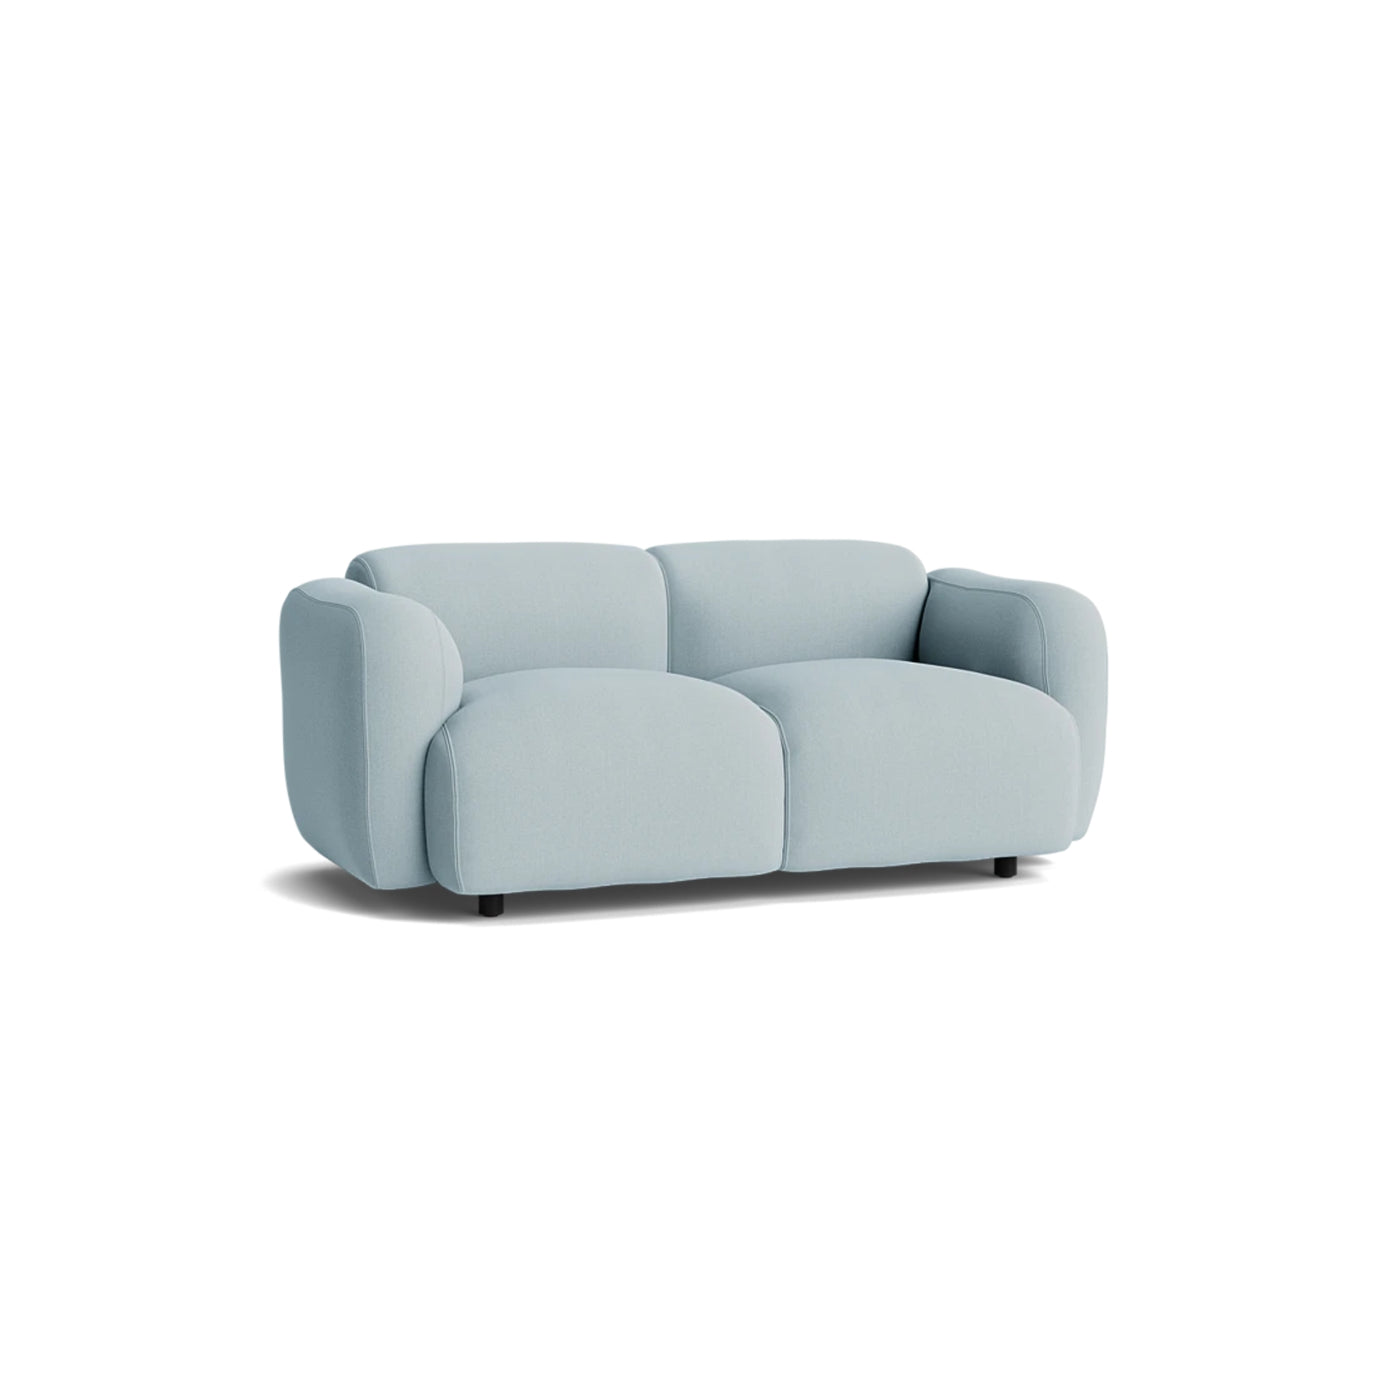 Normann Copenhagen Swell 2 Seater Sofa at someday designs. #colour_steelcut-trio-713